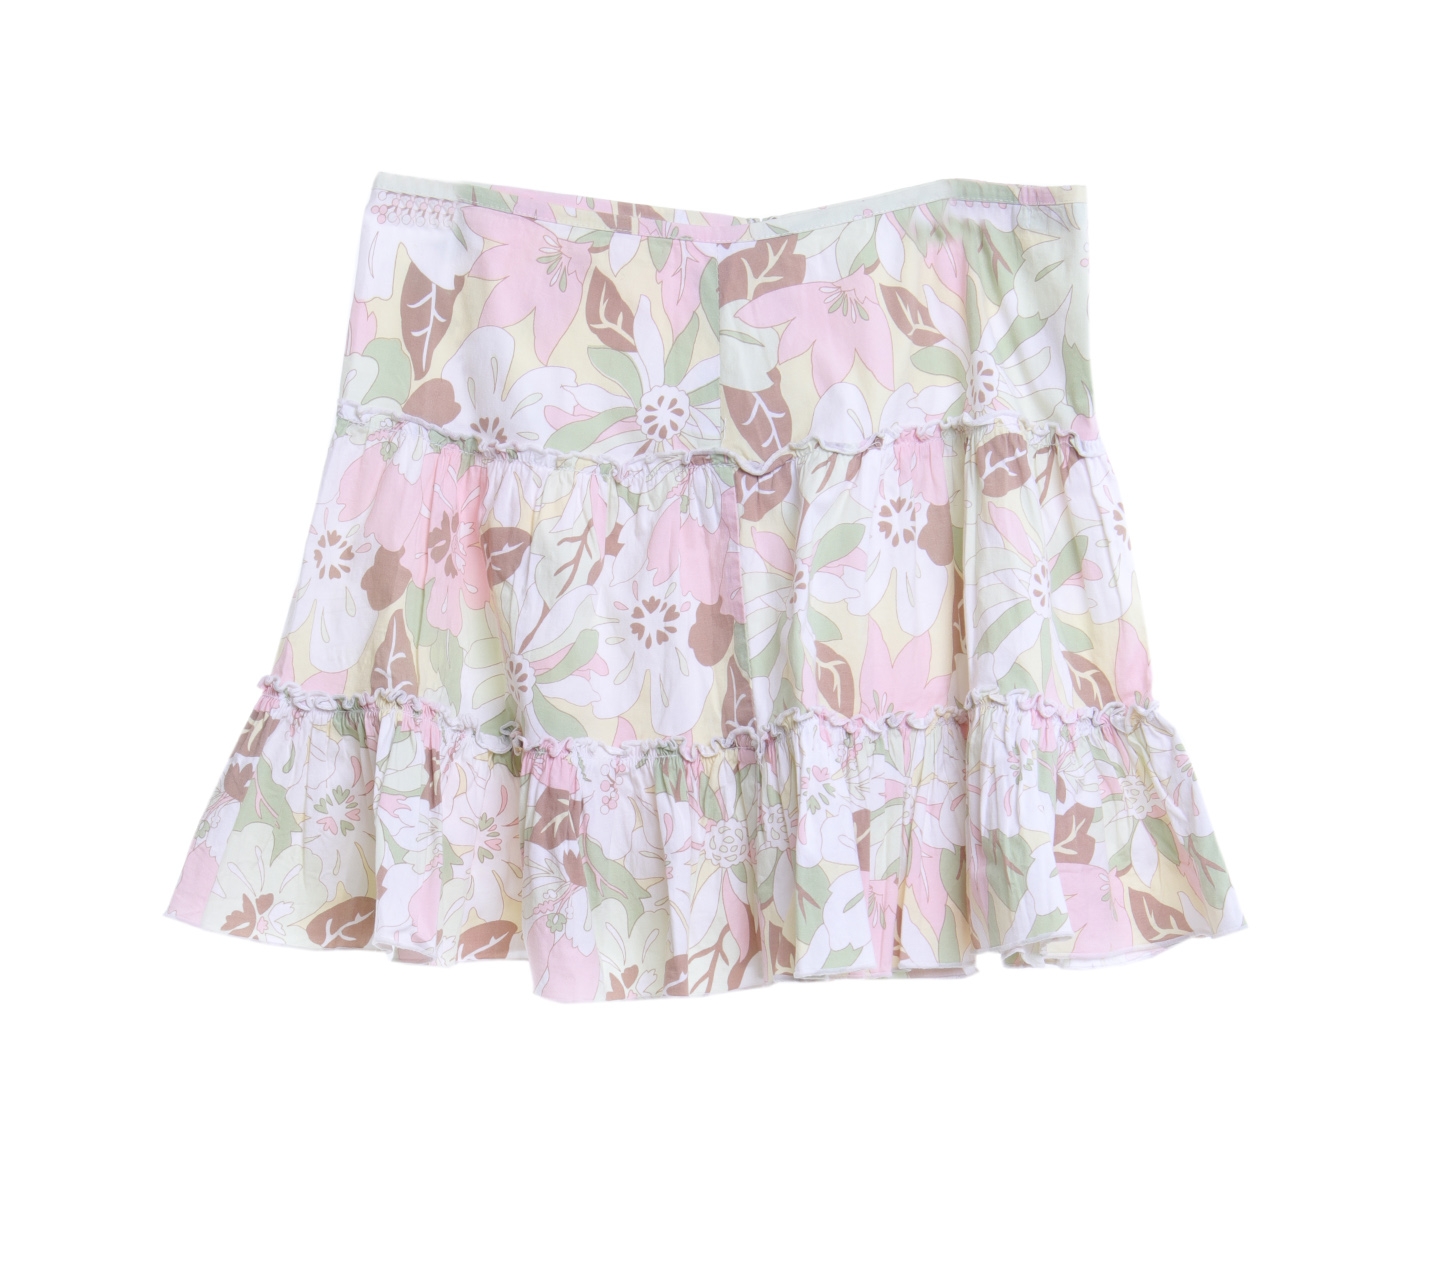 Body and Soul Multi Colour Floral Mini Skirt